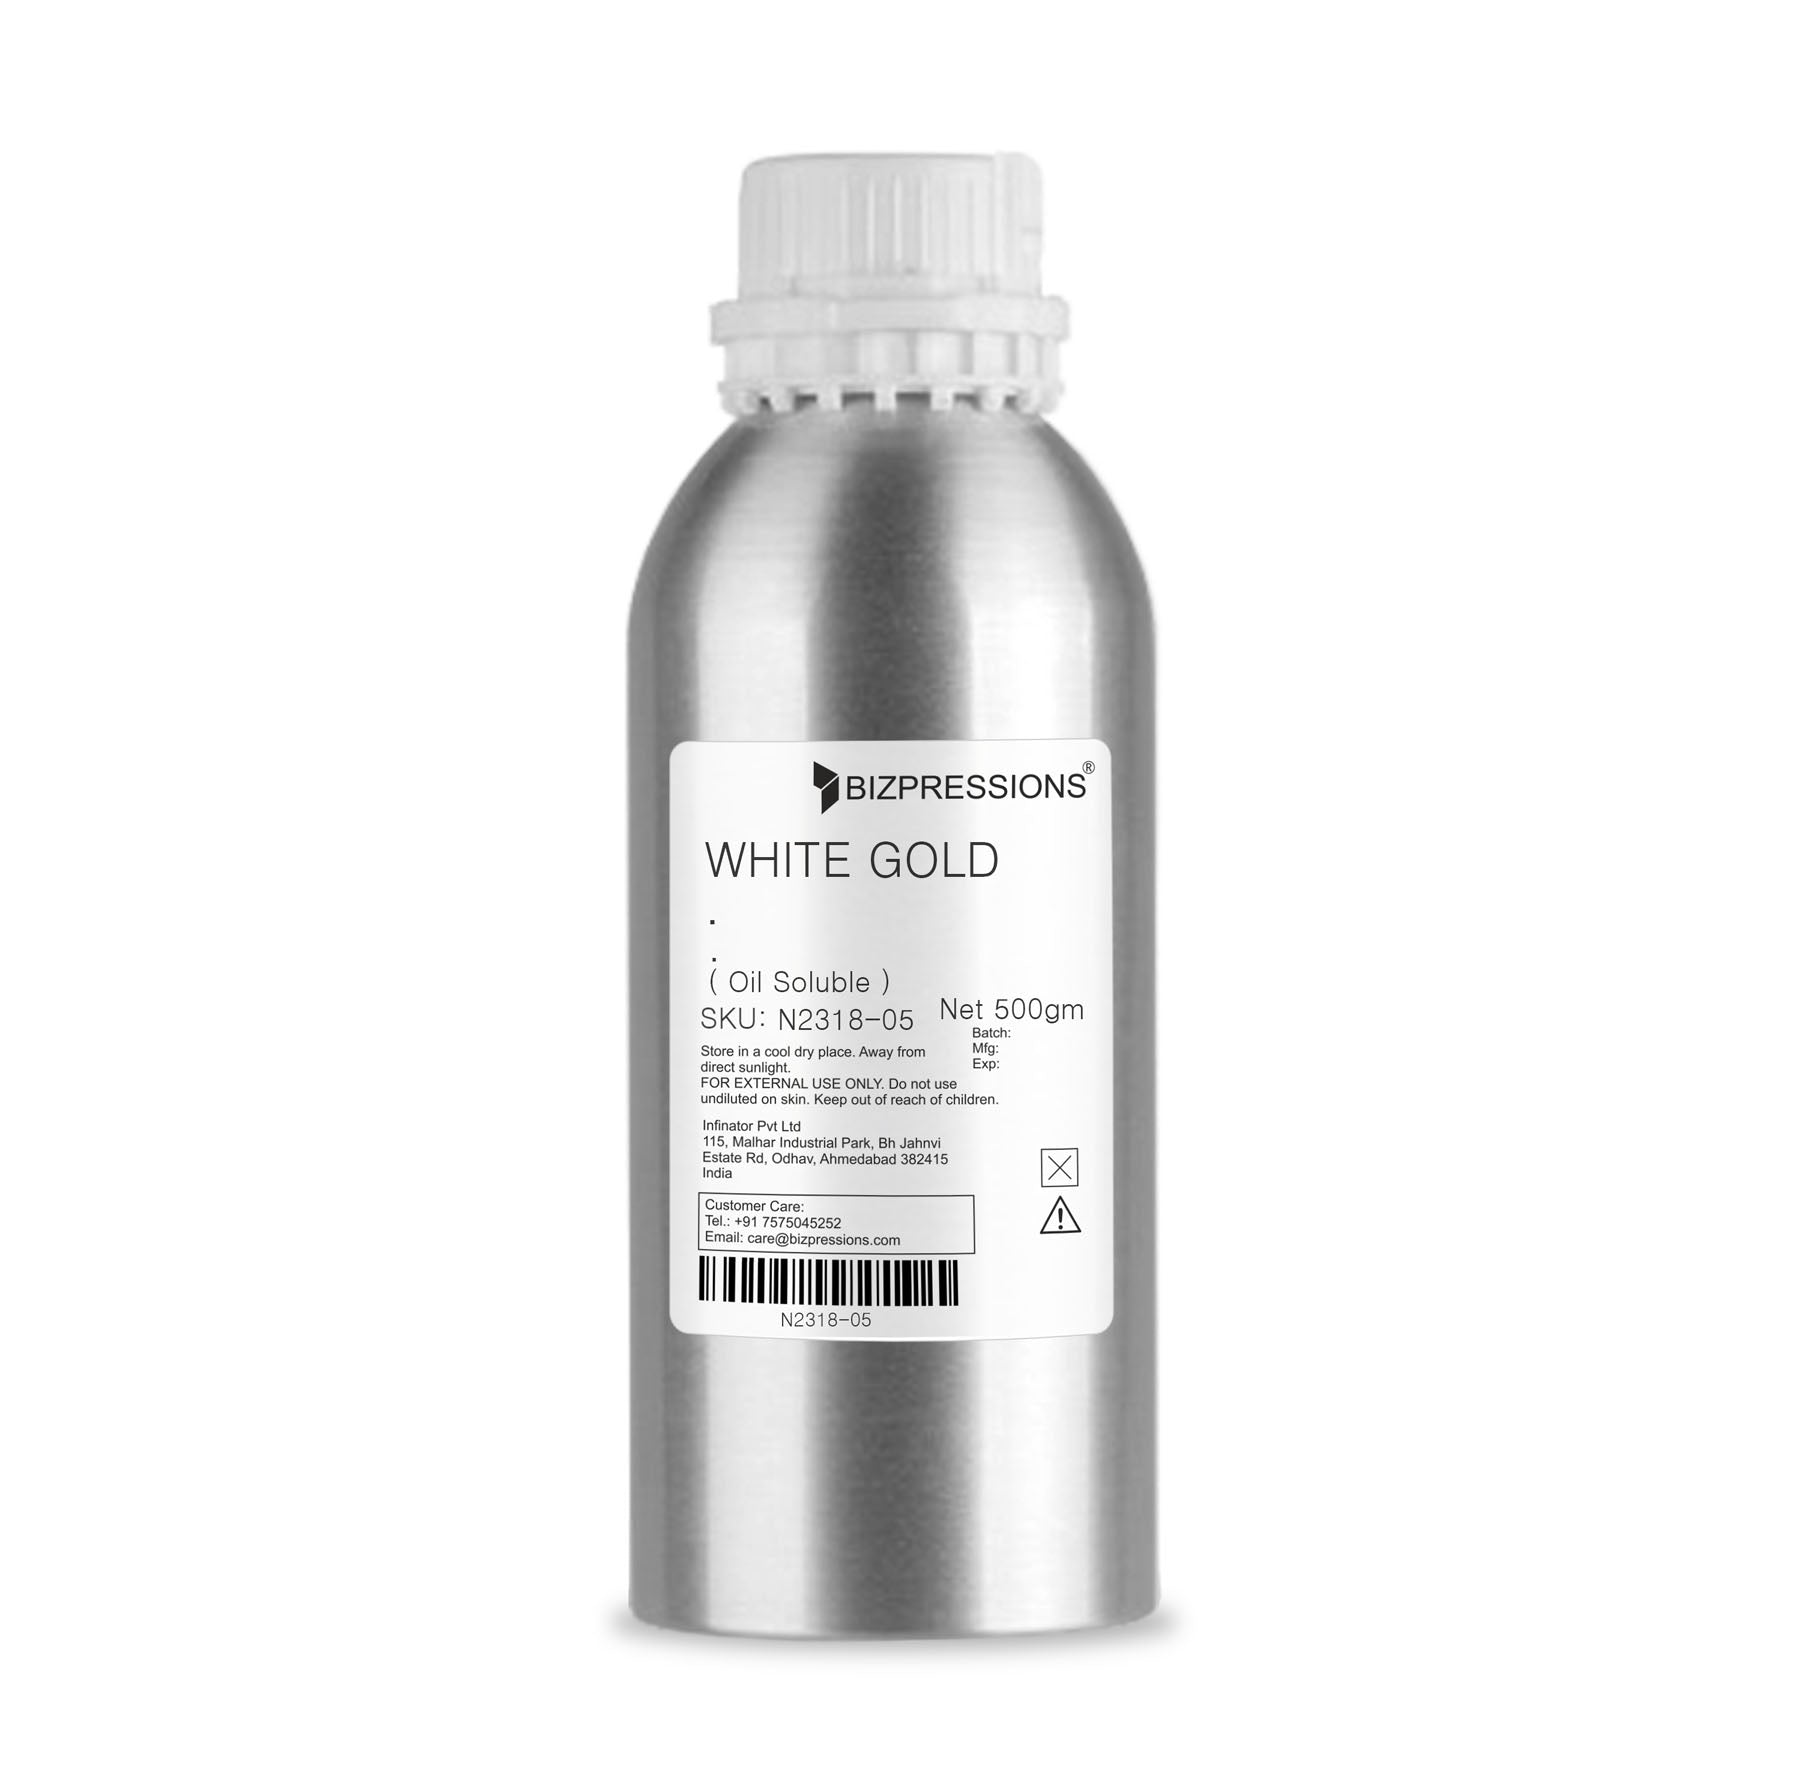 WHITE GOLD - Fragrance ( Oil Soluble ) - 500 gm